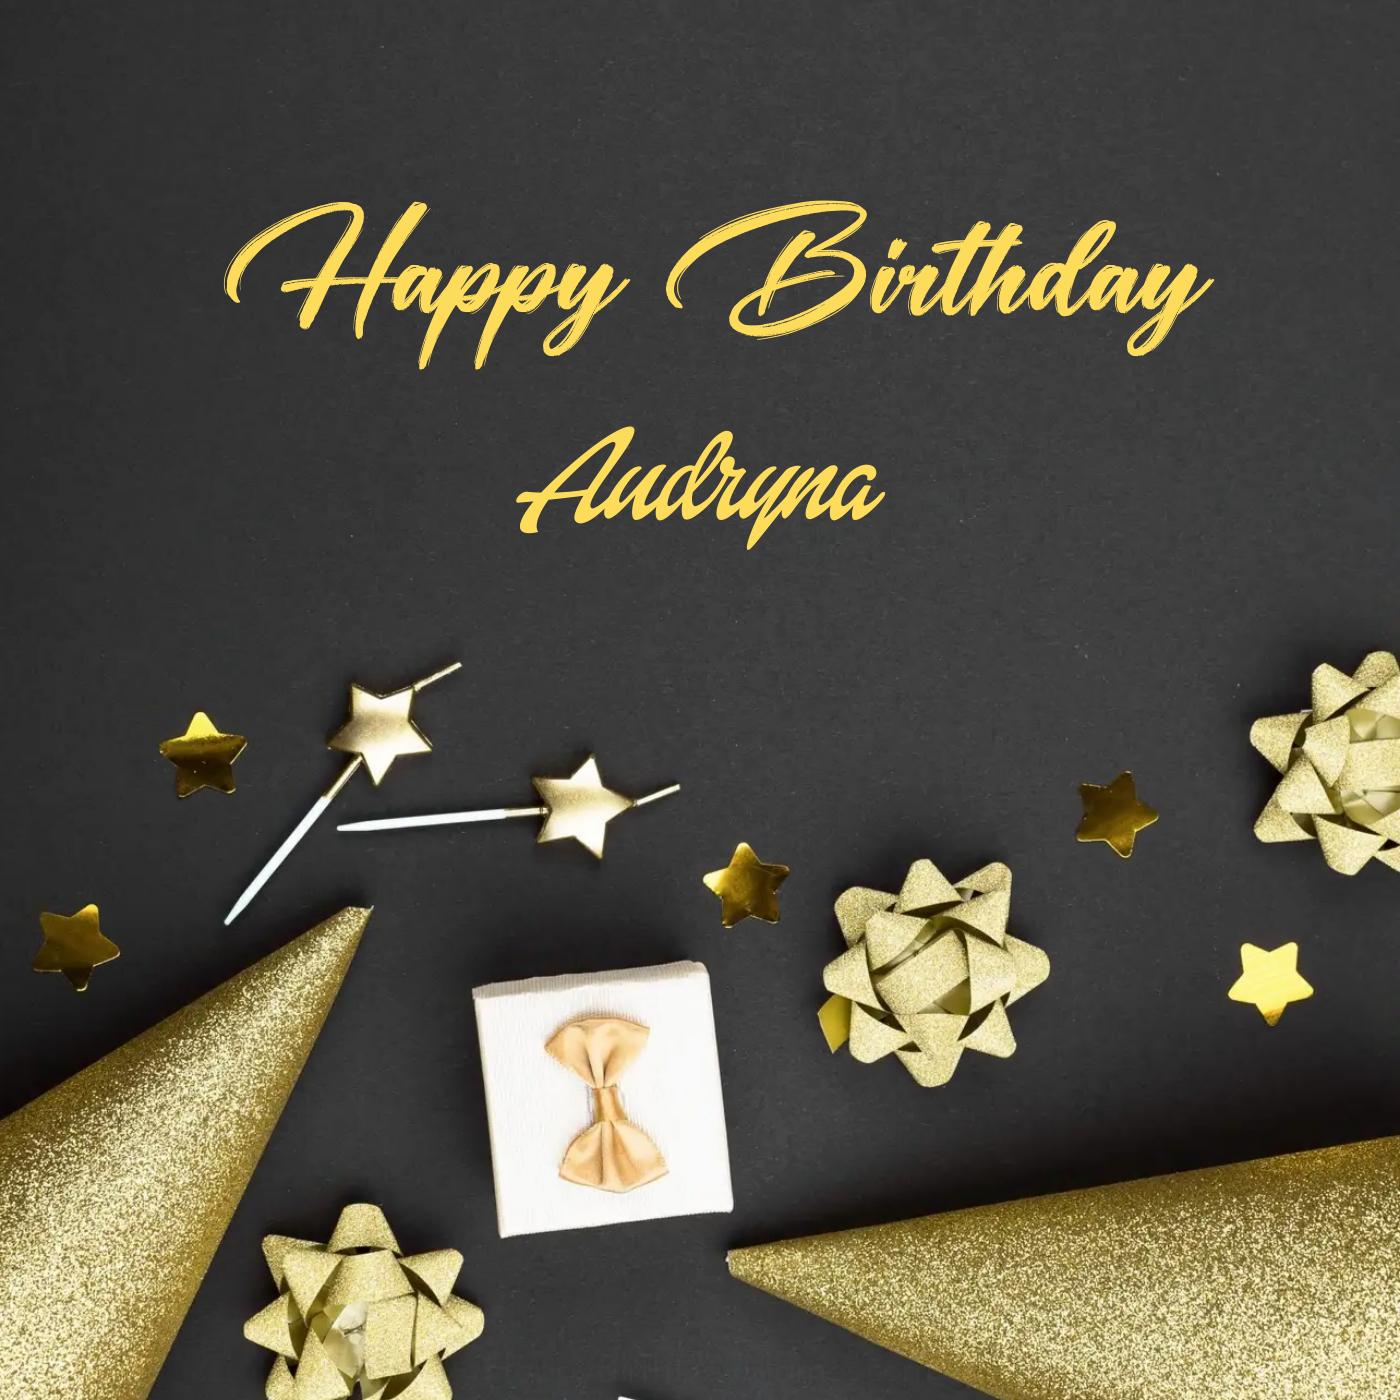 Happy Birthday Audryna Golden Theme Card